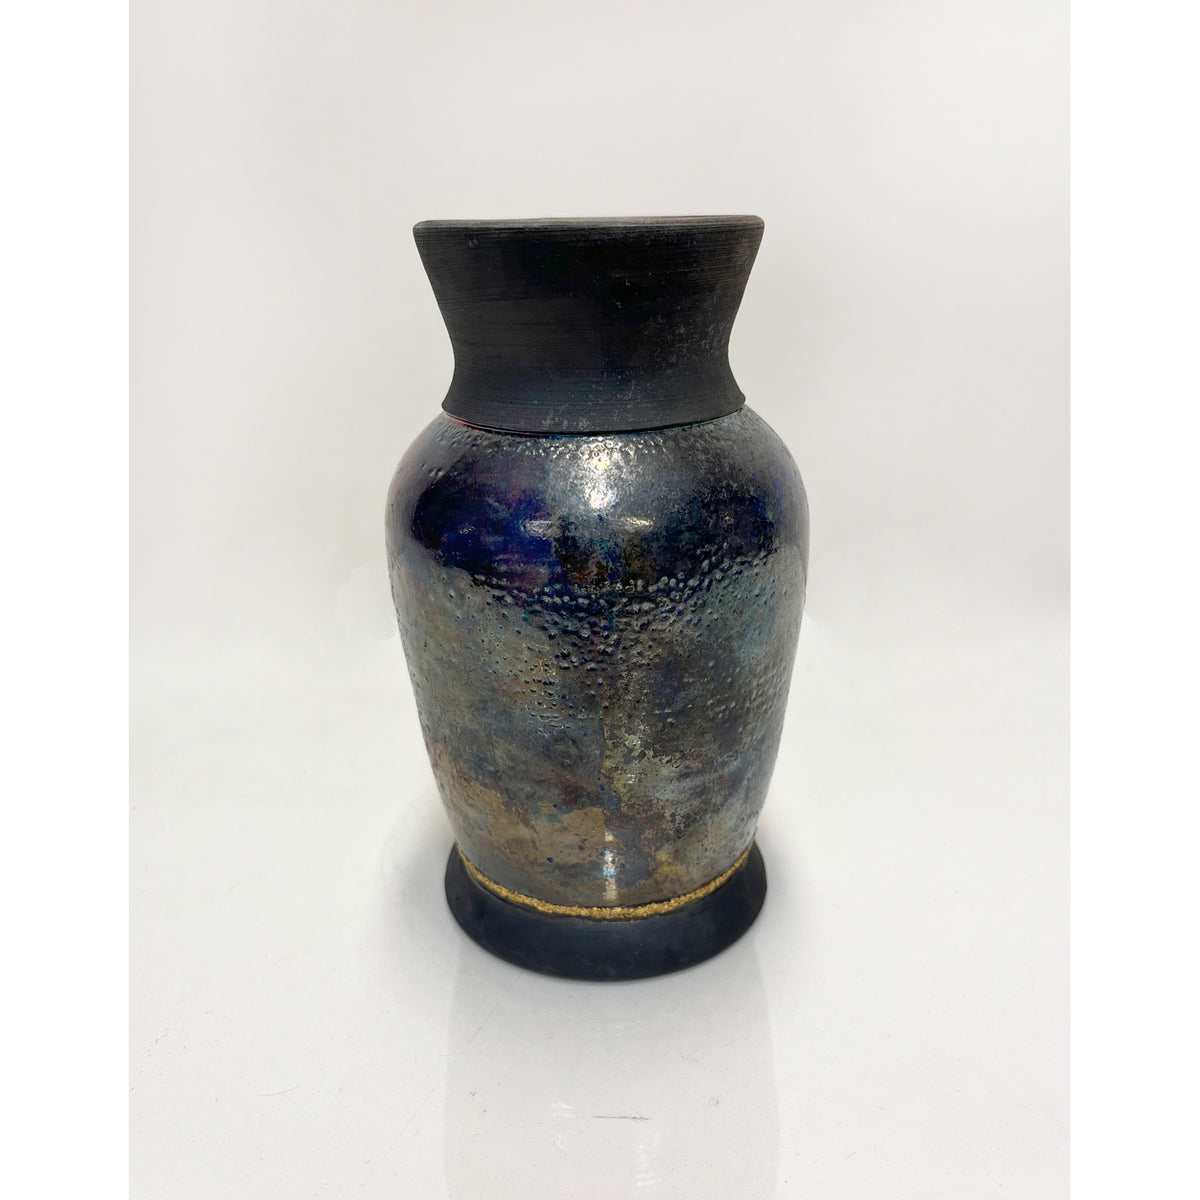 Catherine Harasymiw - Gold Kintsugi Foot Vase, 7.5" x 4.5" x 4.5"